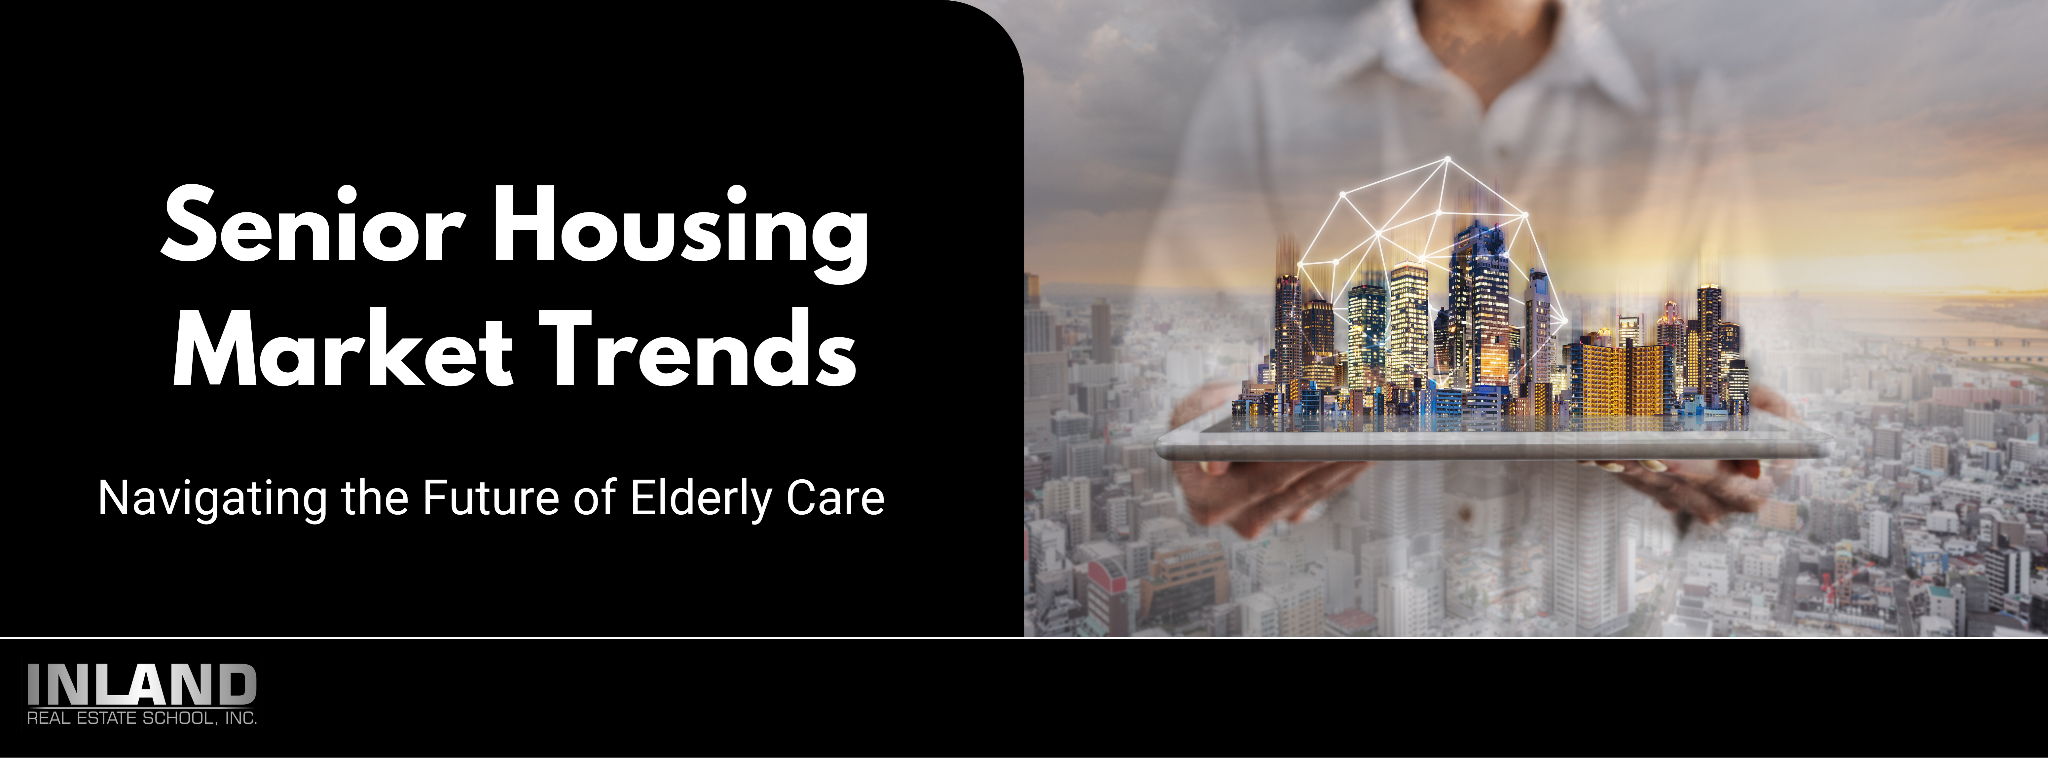 Senior Housing Market Trends: Navigating the Future of Elderly Care